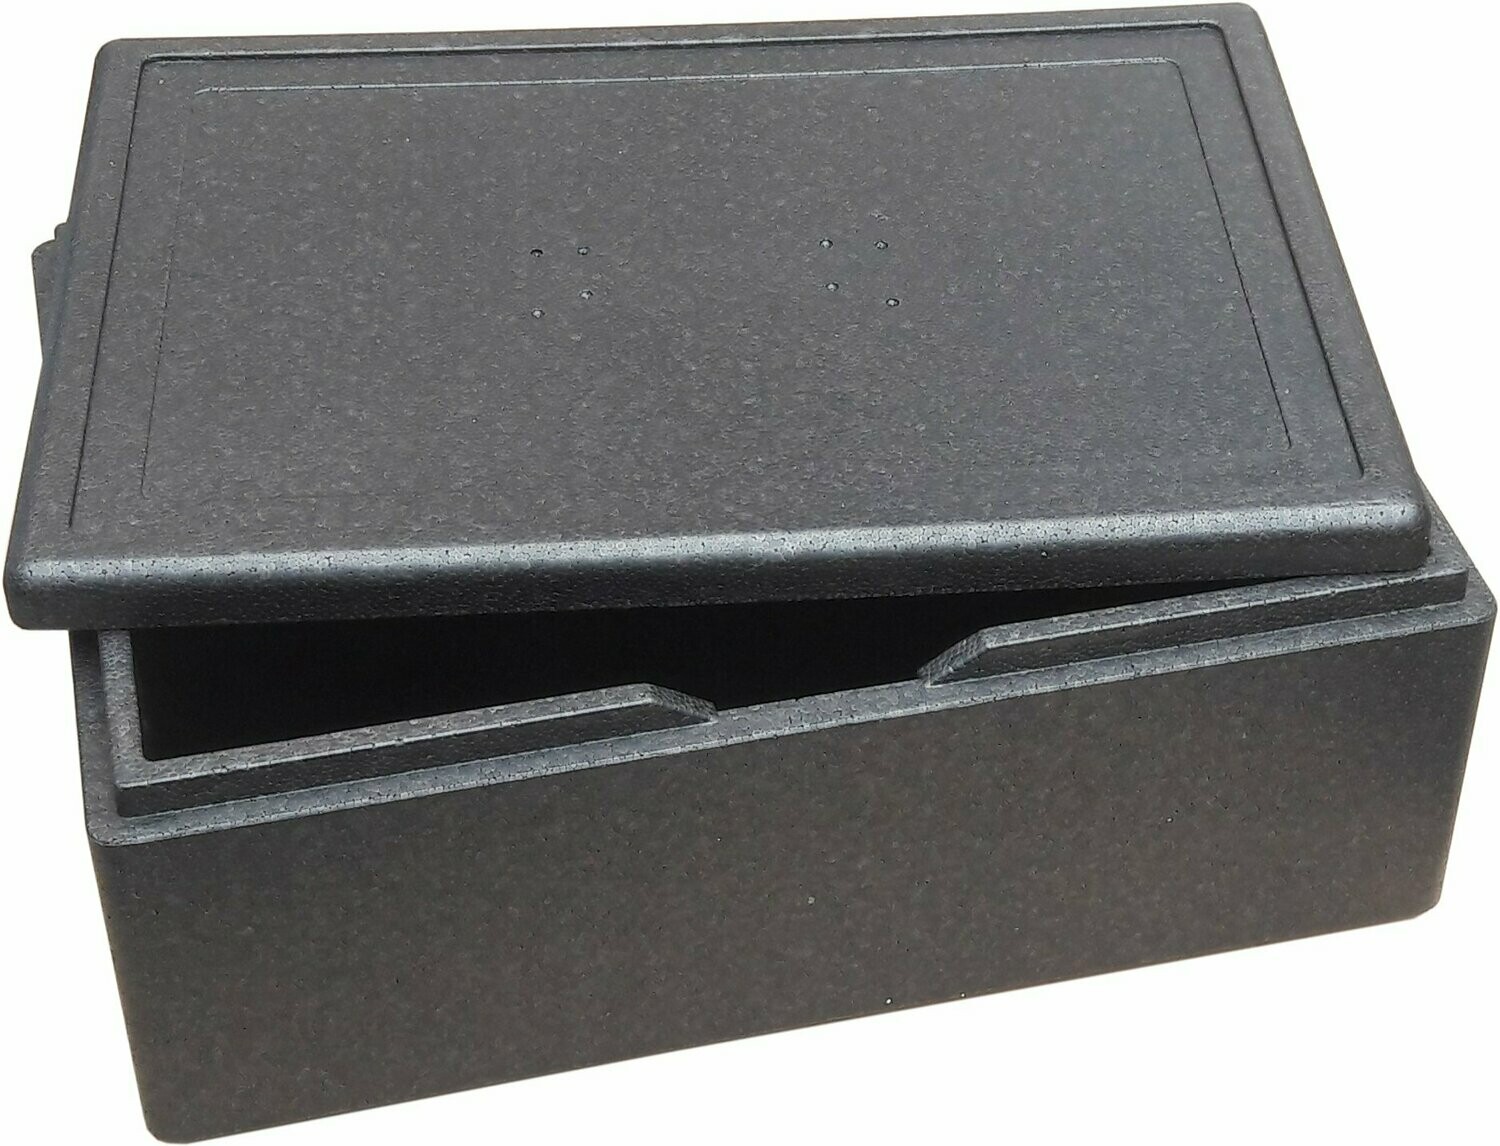 Gastrobox GB200 piocelan 68,5 x 48,5 x 26,5 cm 53 litry